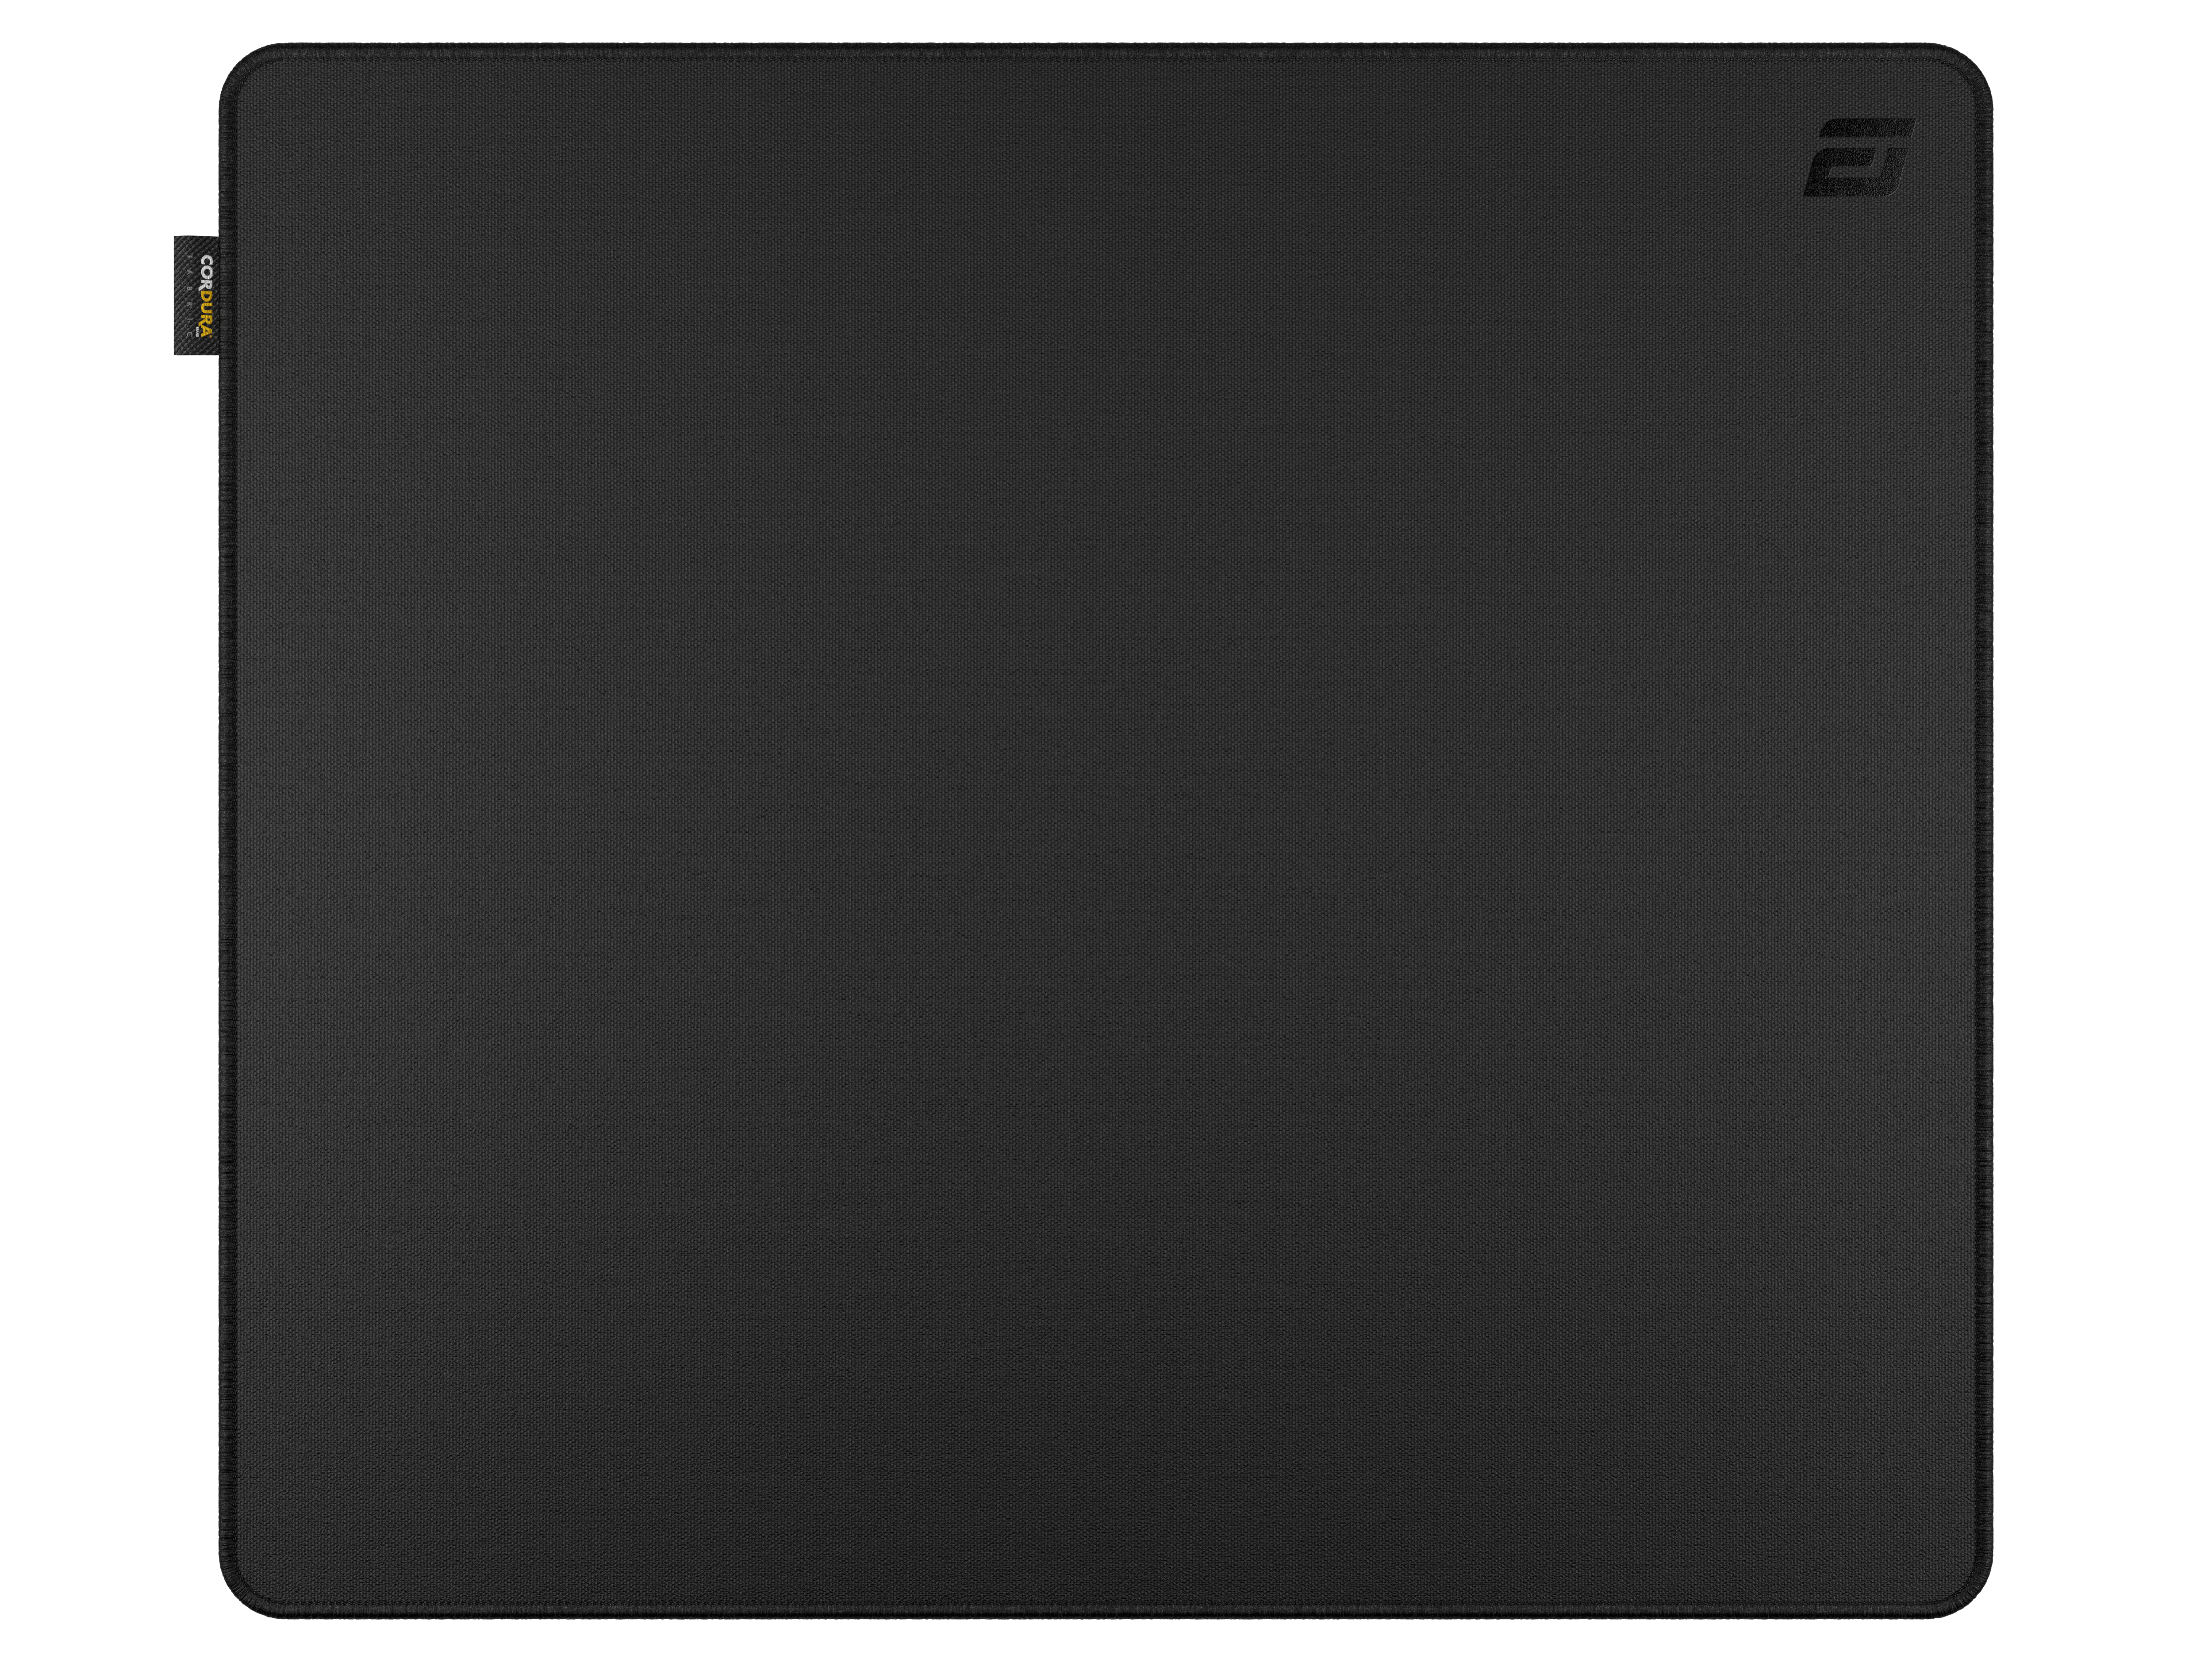 Endgamegear - MPC450 CORDURA® Gaming Mousepad STEALTH EDITION